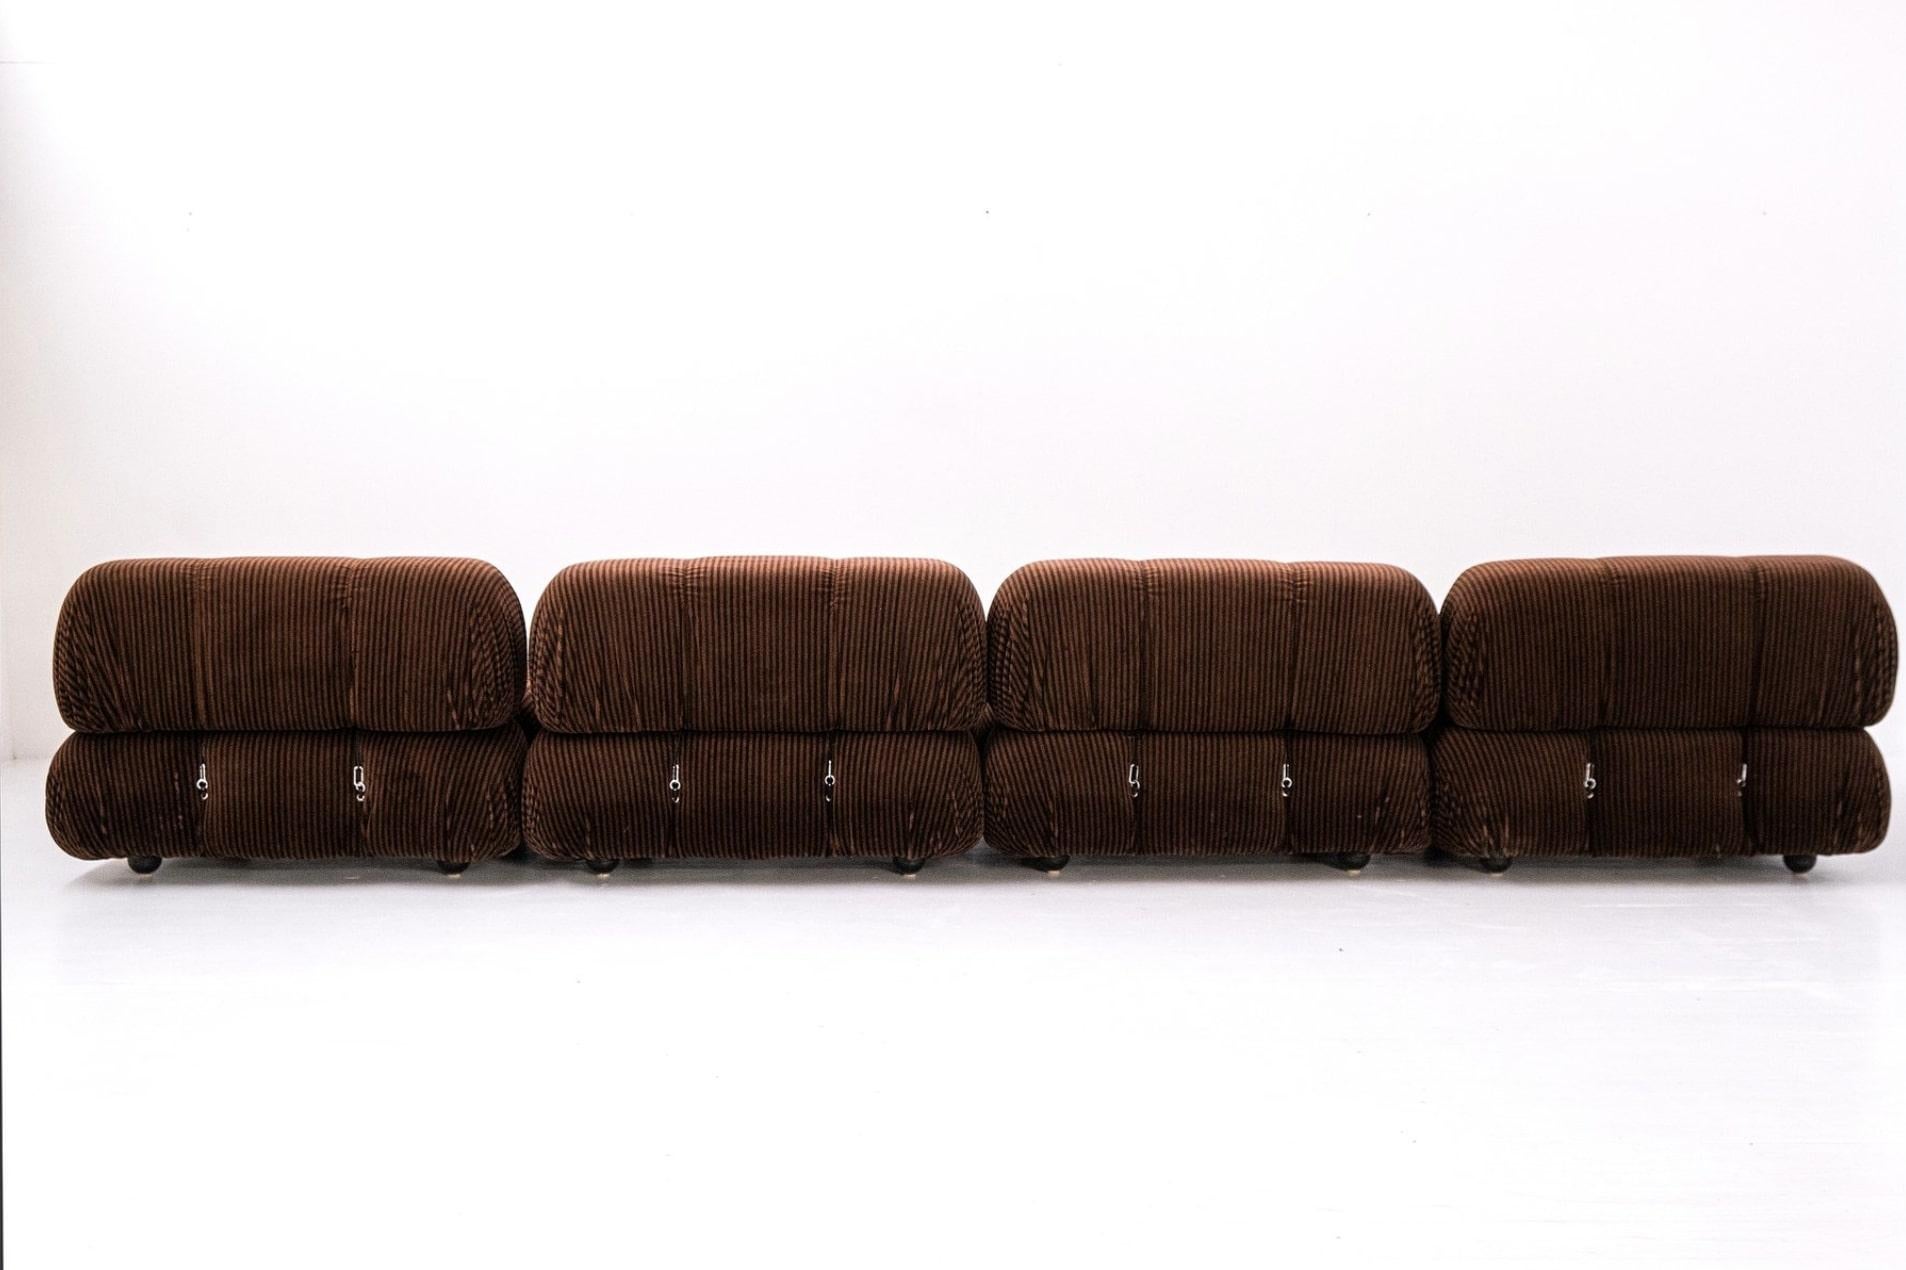 Textile Camaleonda  Modular Sofa by Mario Bellini for B&B Italia, 1970, Italy (4 pieces) For Sale